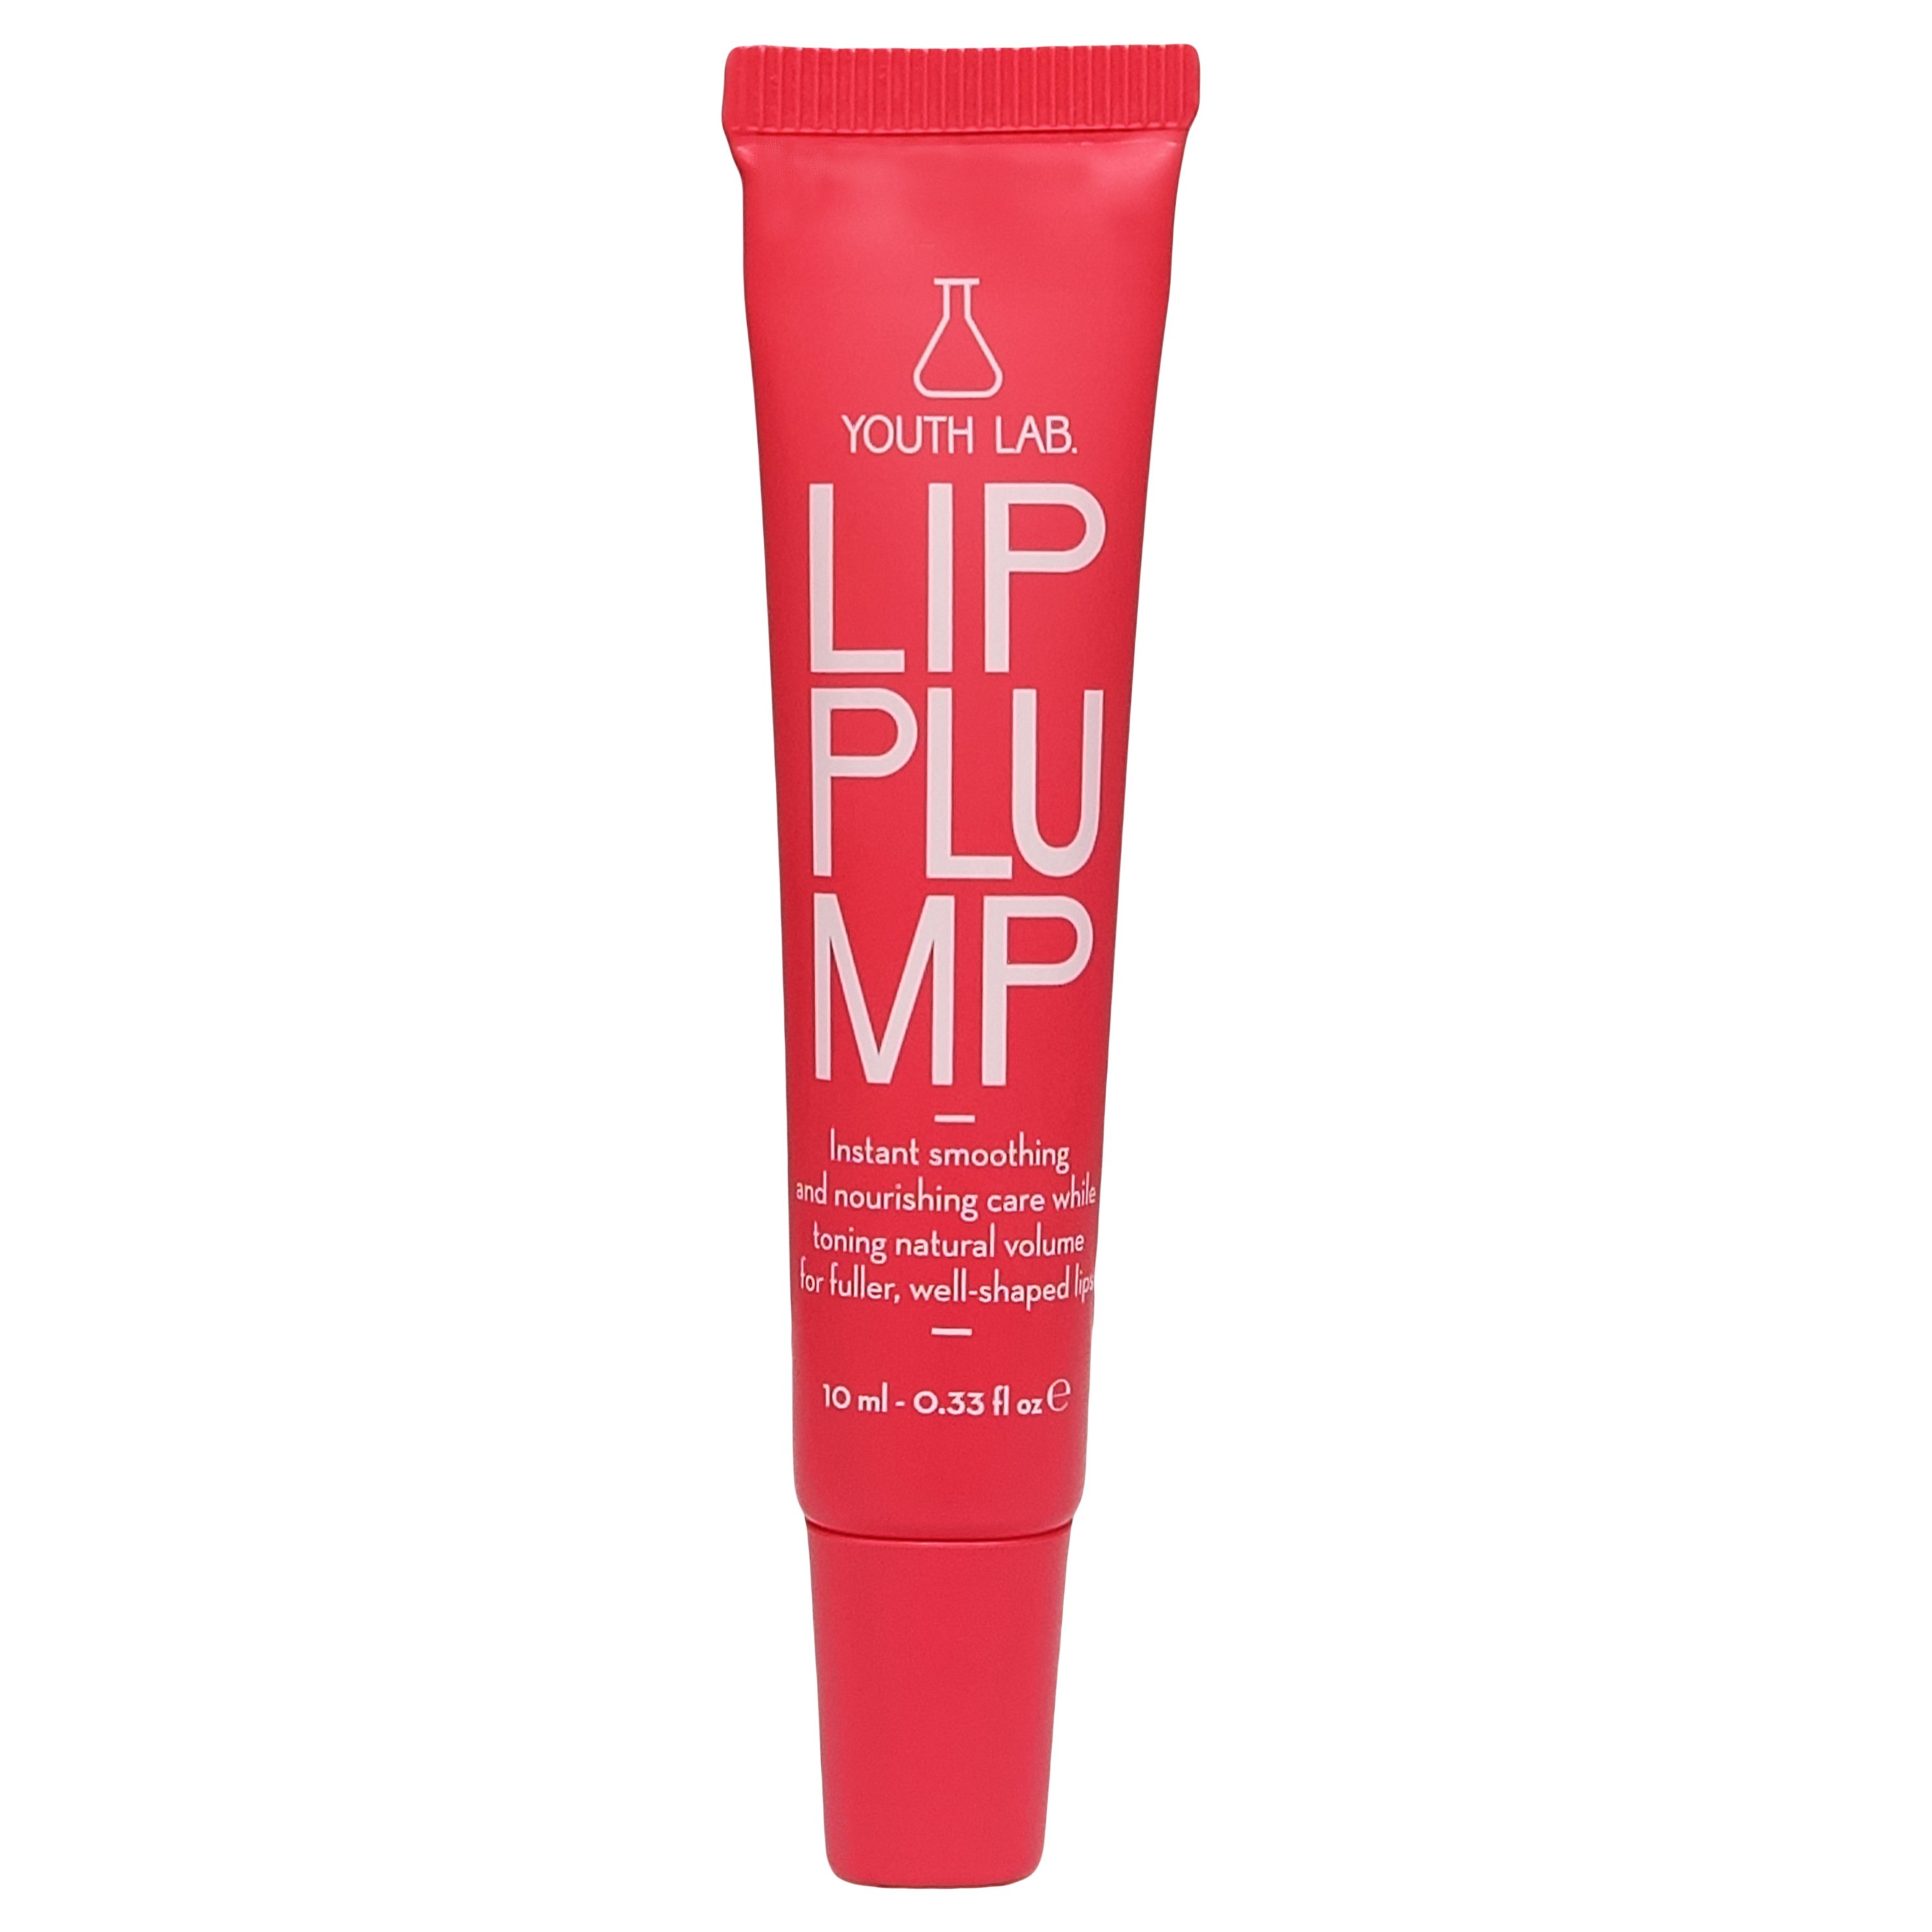 Youth Lab Lip Plump Instant Smoothing & Nourishing Lip Care Lip Gloss για Περιποίηση Χειλιών & Λείανση Γραμμών 10ml – Coral Pink